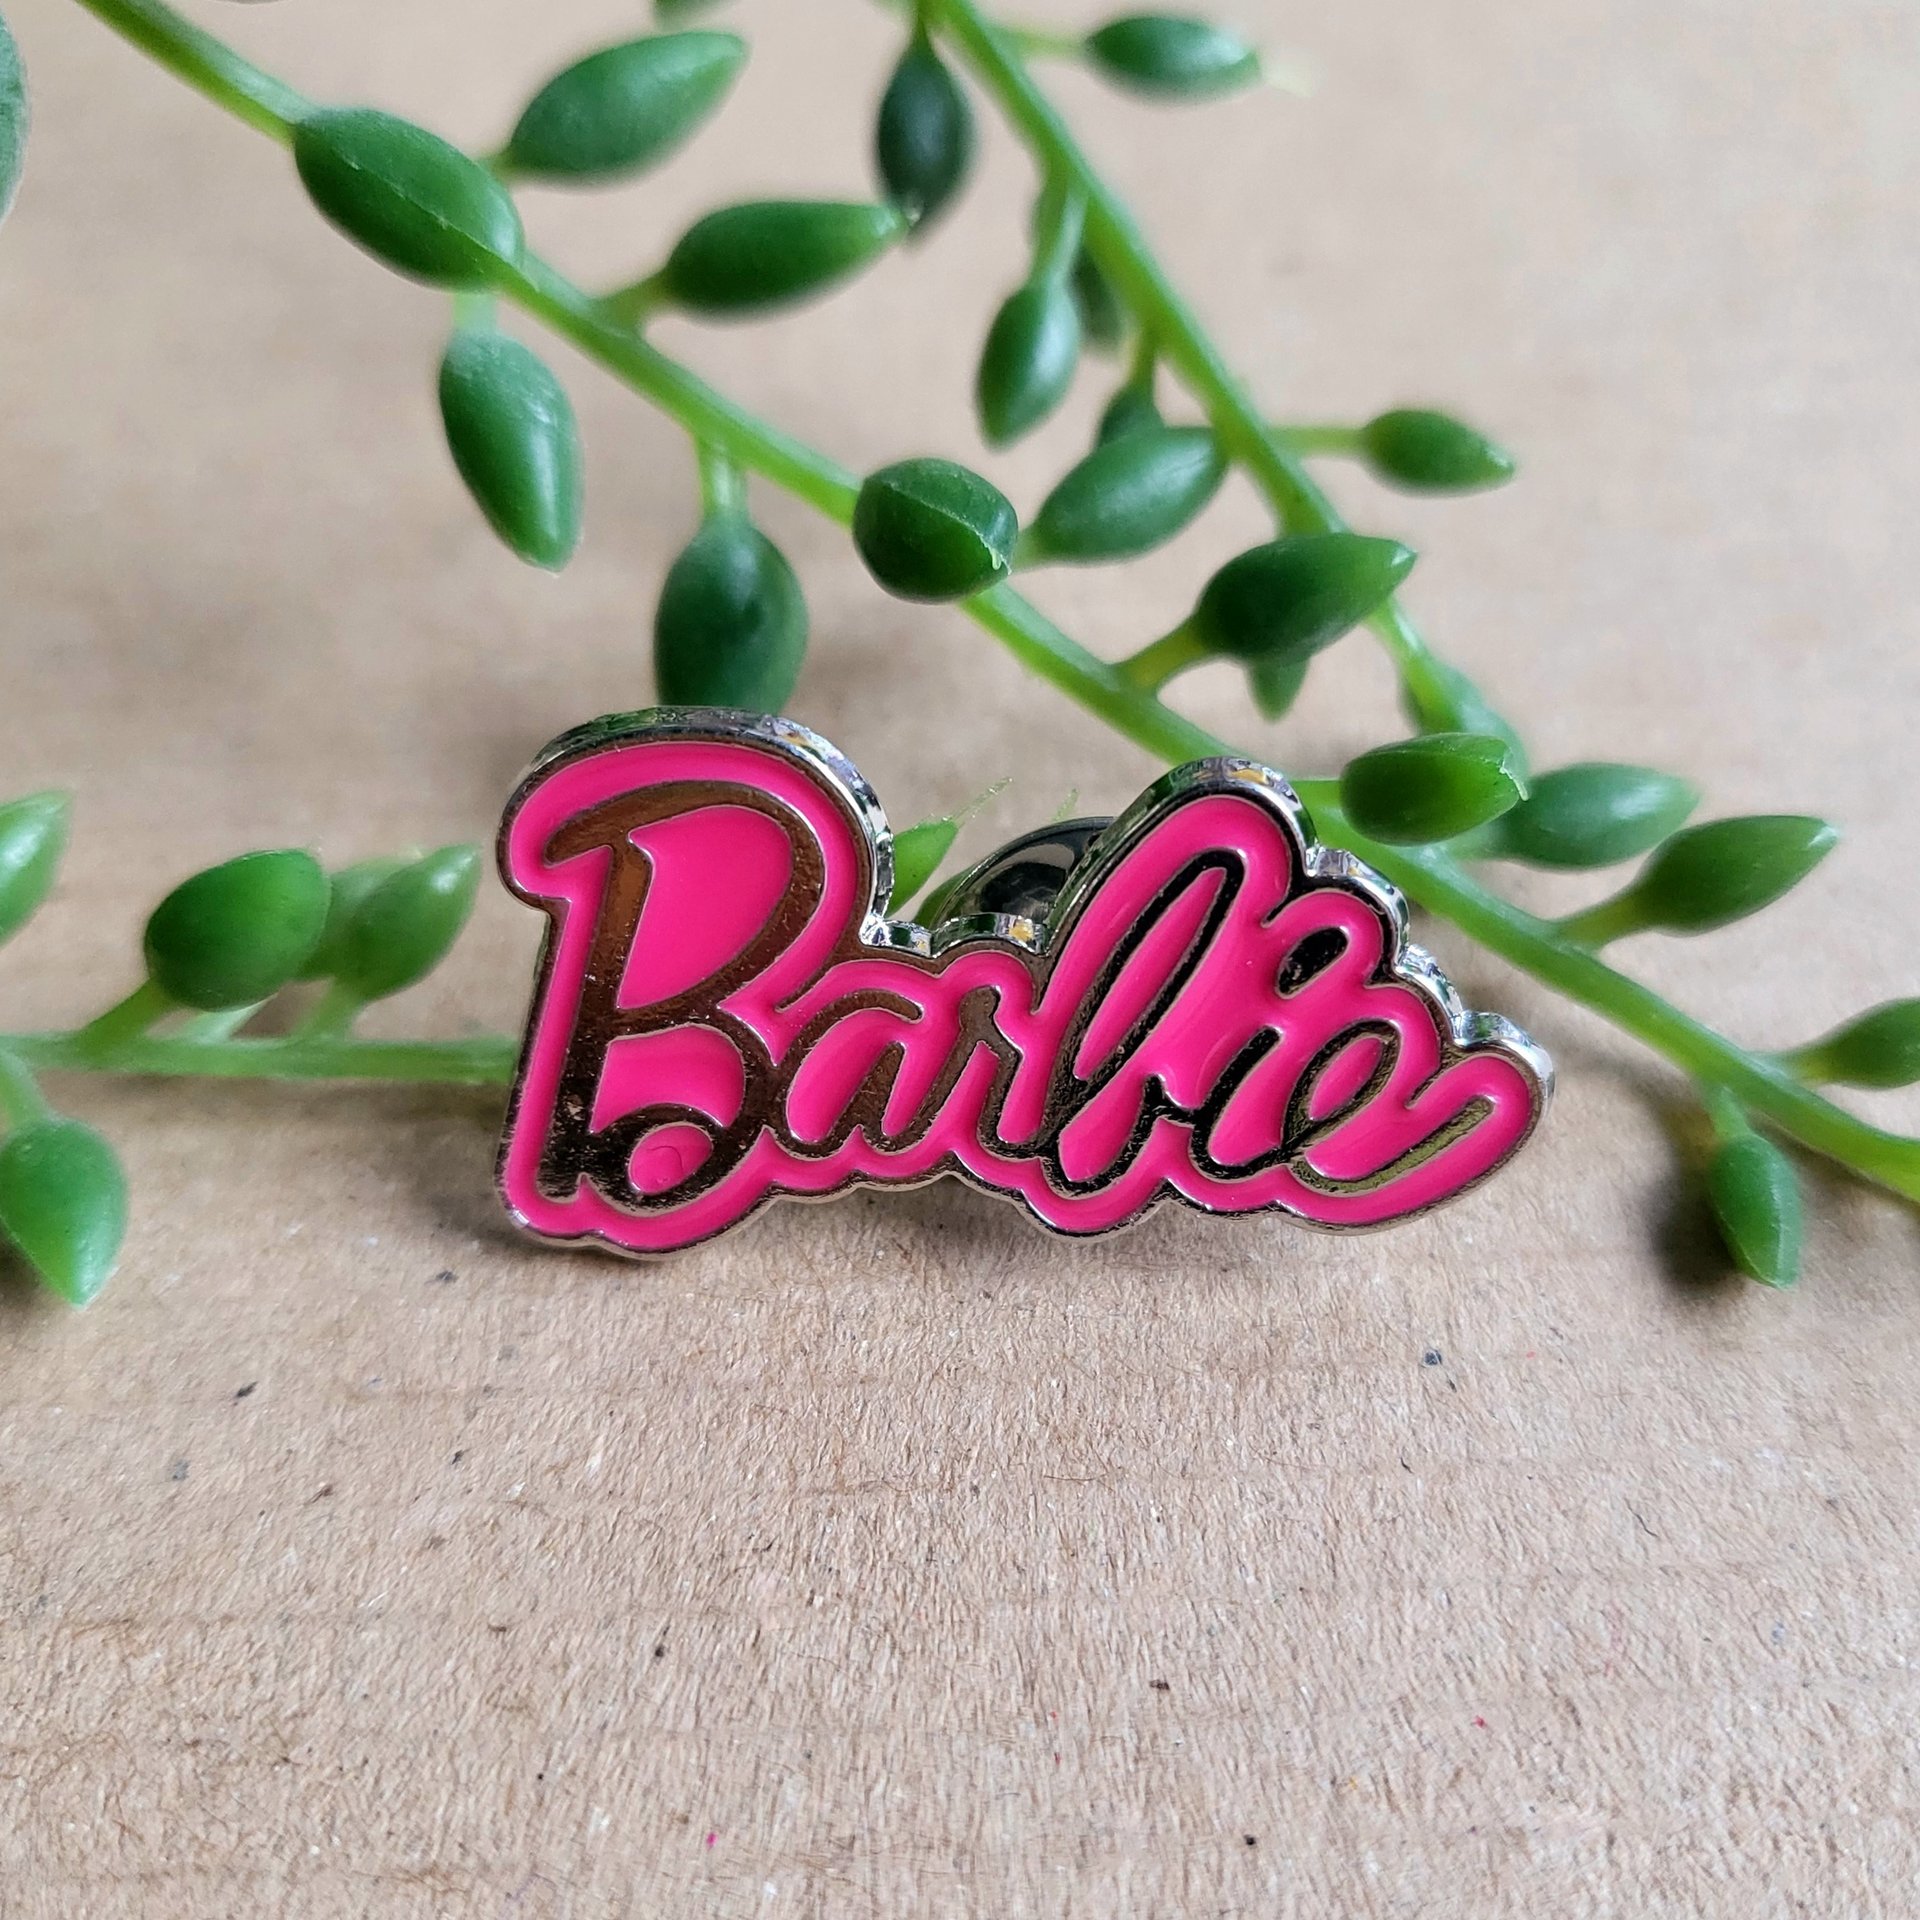 Barbie Enamel Pin badge